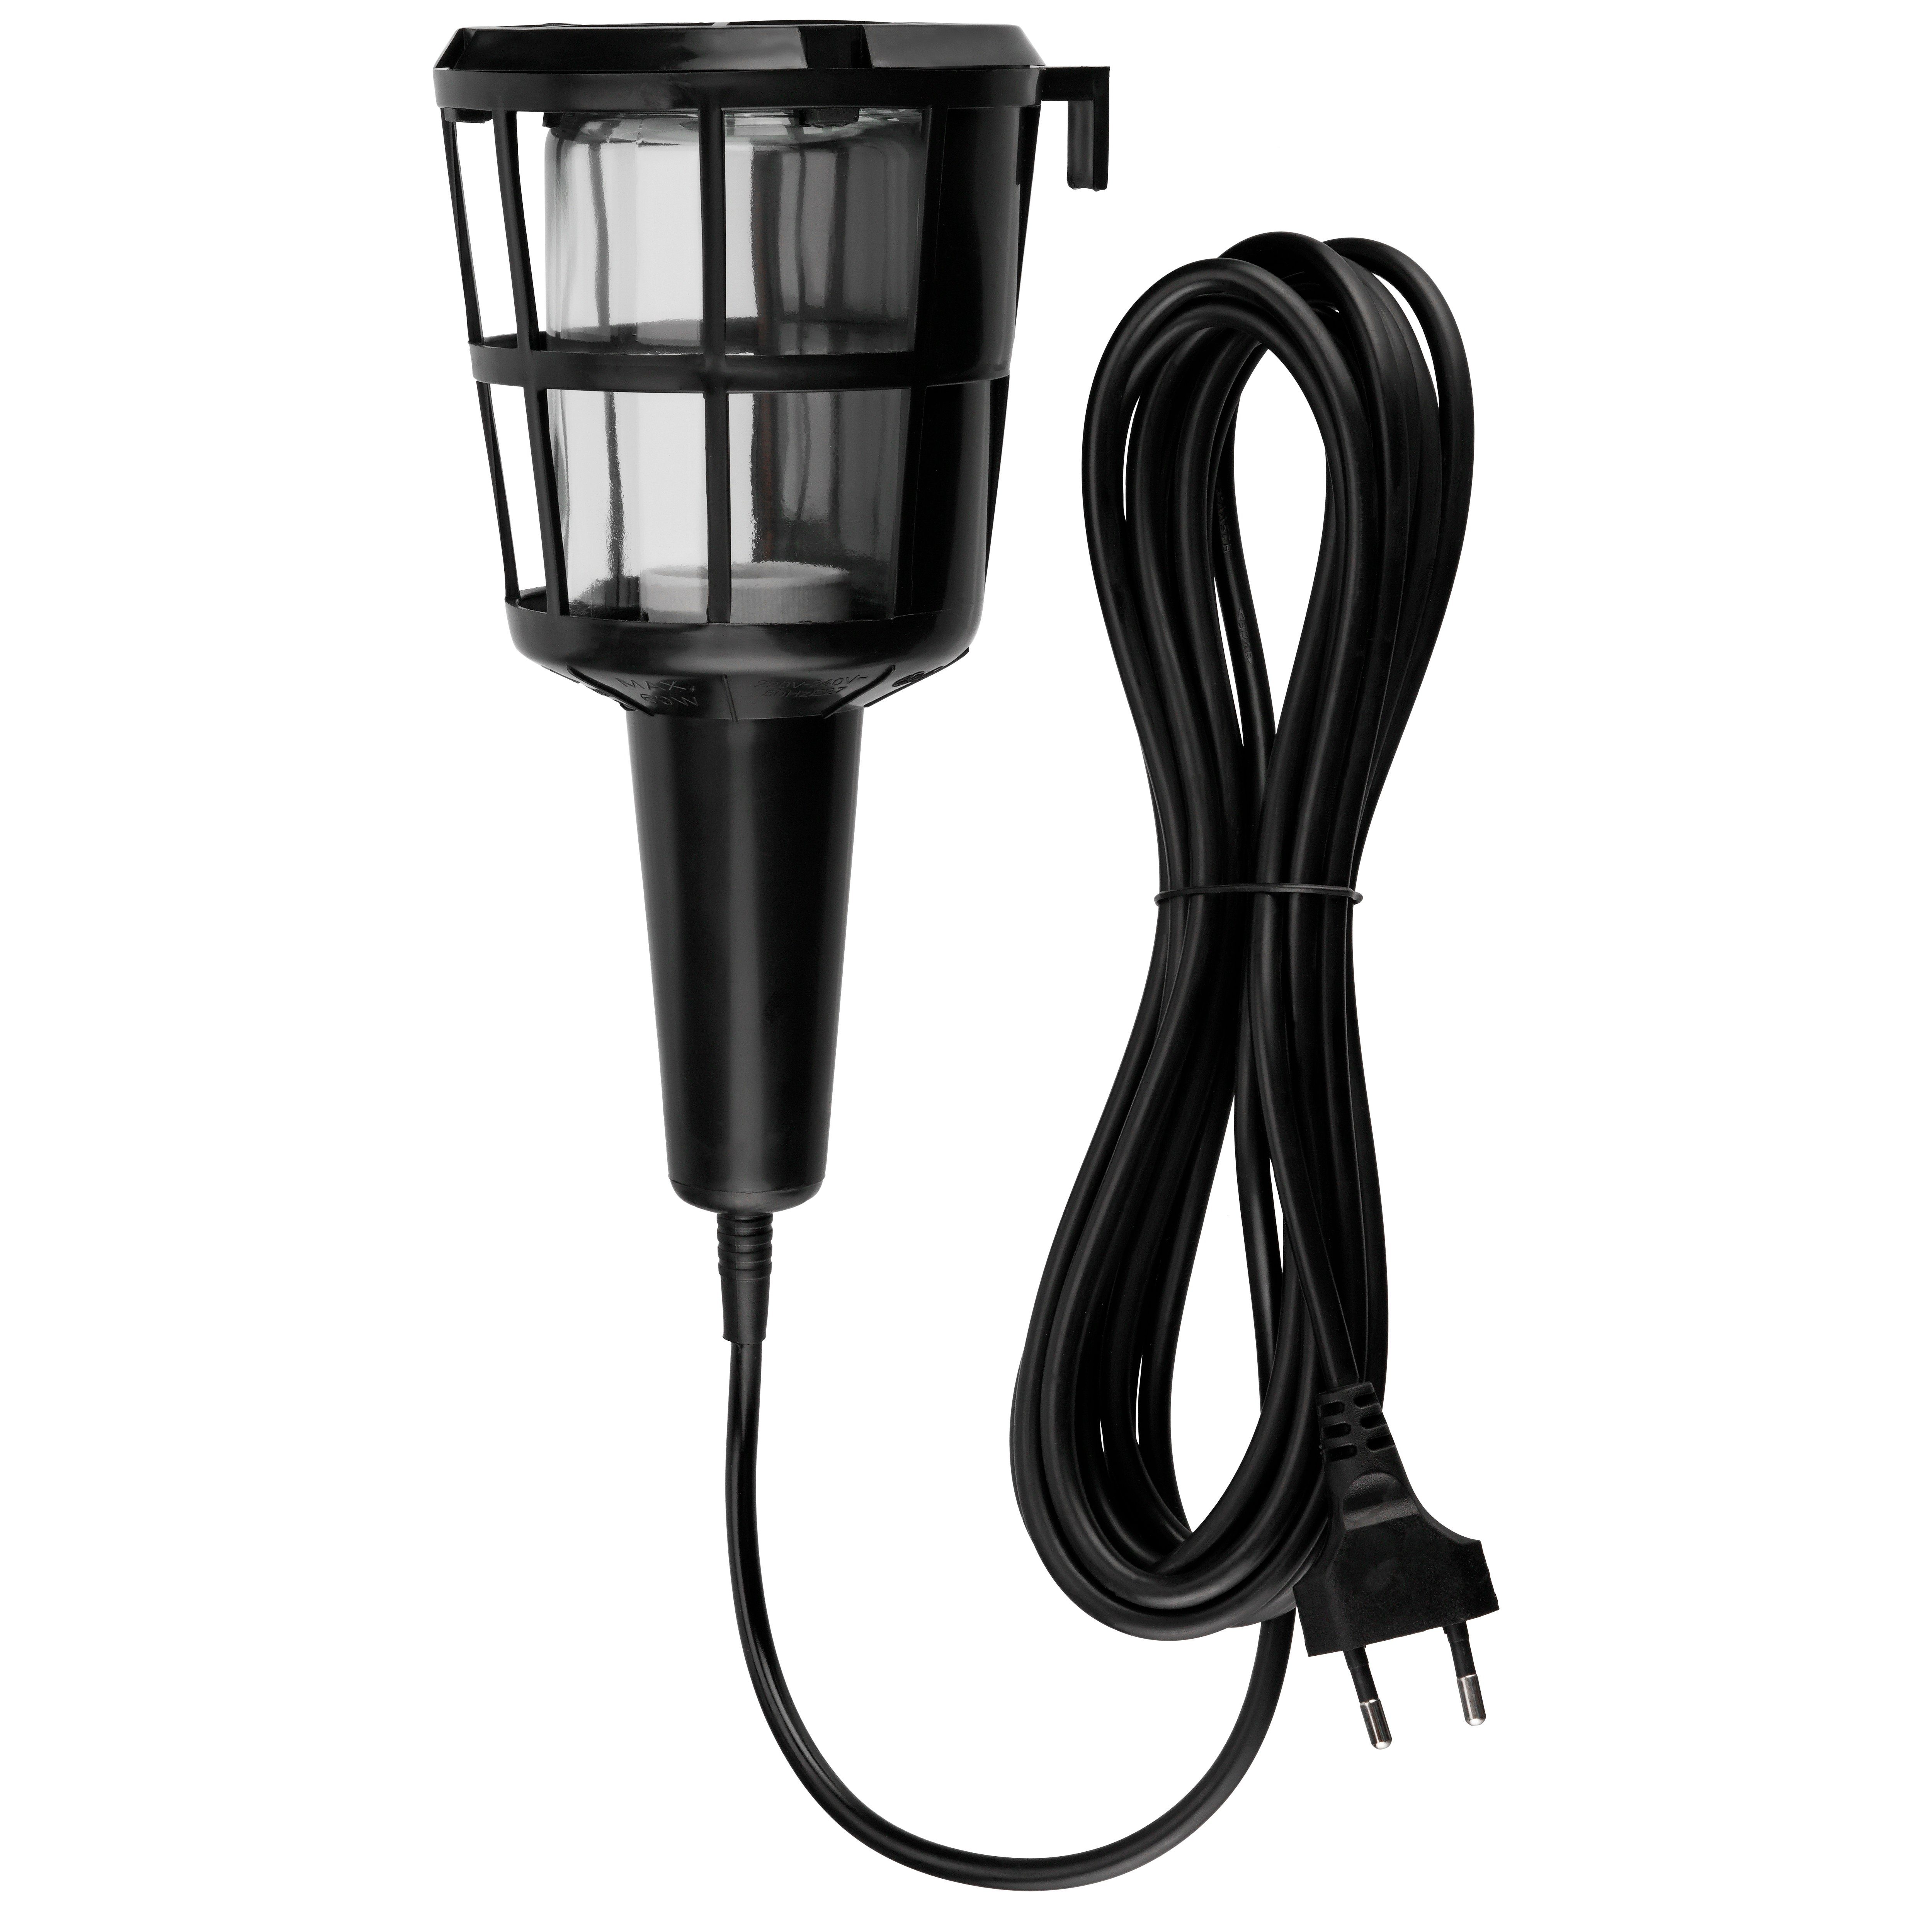 REV LED Arbeitsleuchte Handlampe, Bauleuchte 60 Watt, E27 o. Leuchtmittel, 5m, IP20, Kunststoff